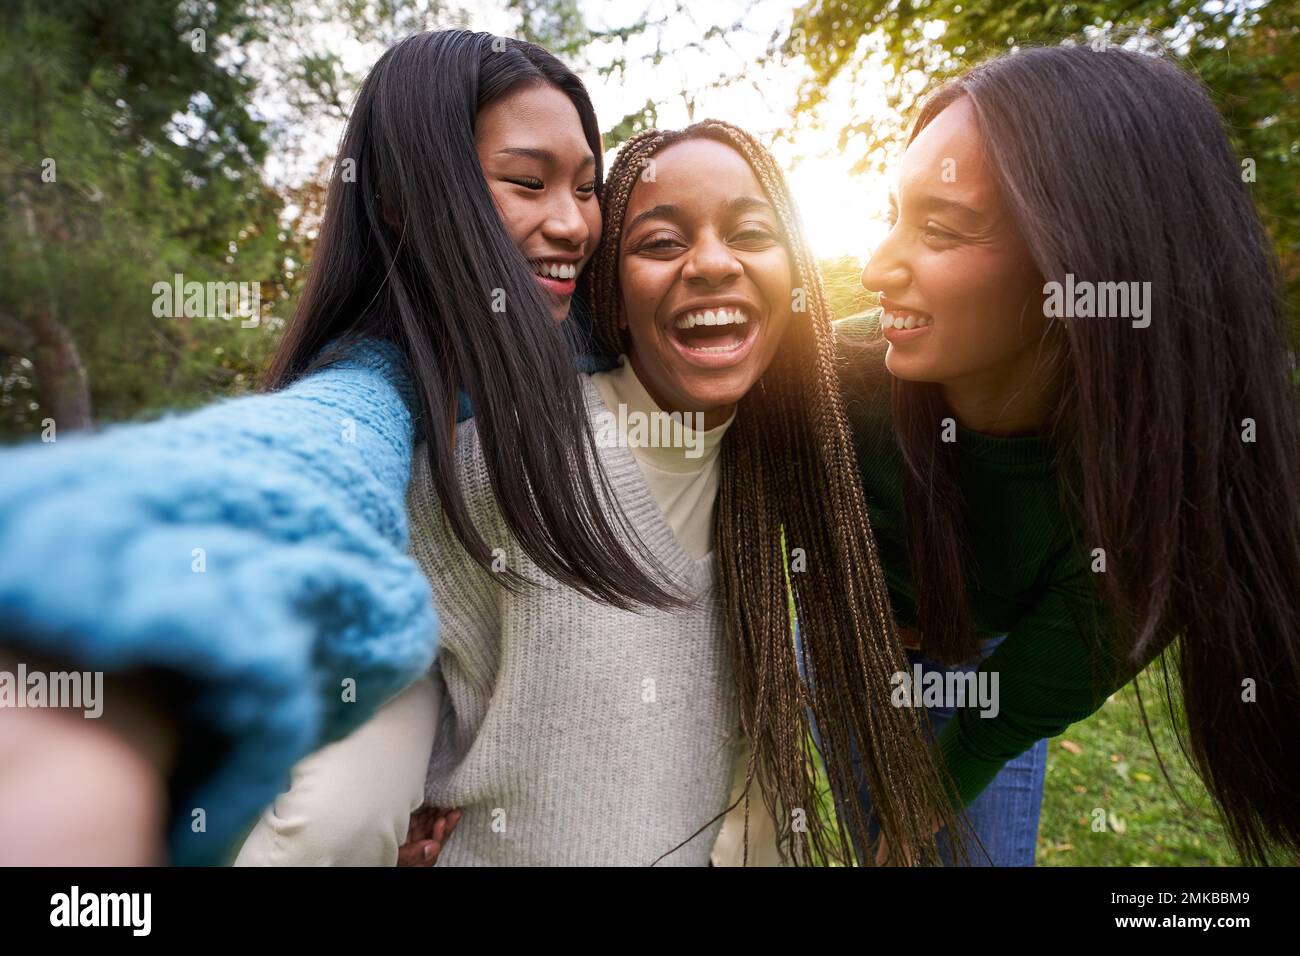 Portrait of three girls outside having fun taking selfie Friendship in multi-ethnic groups of people Stock Photo